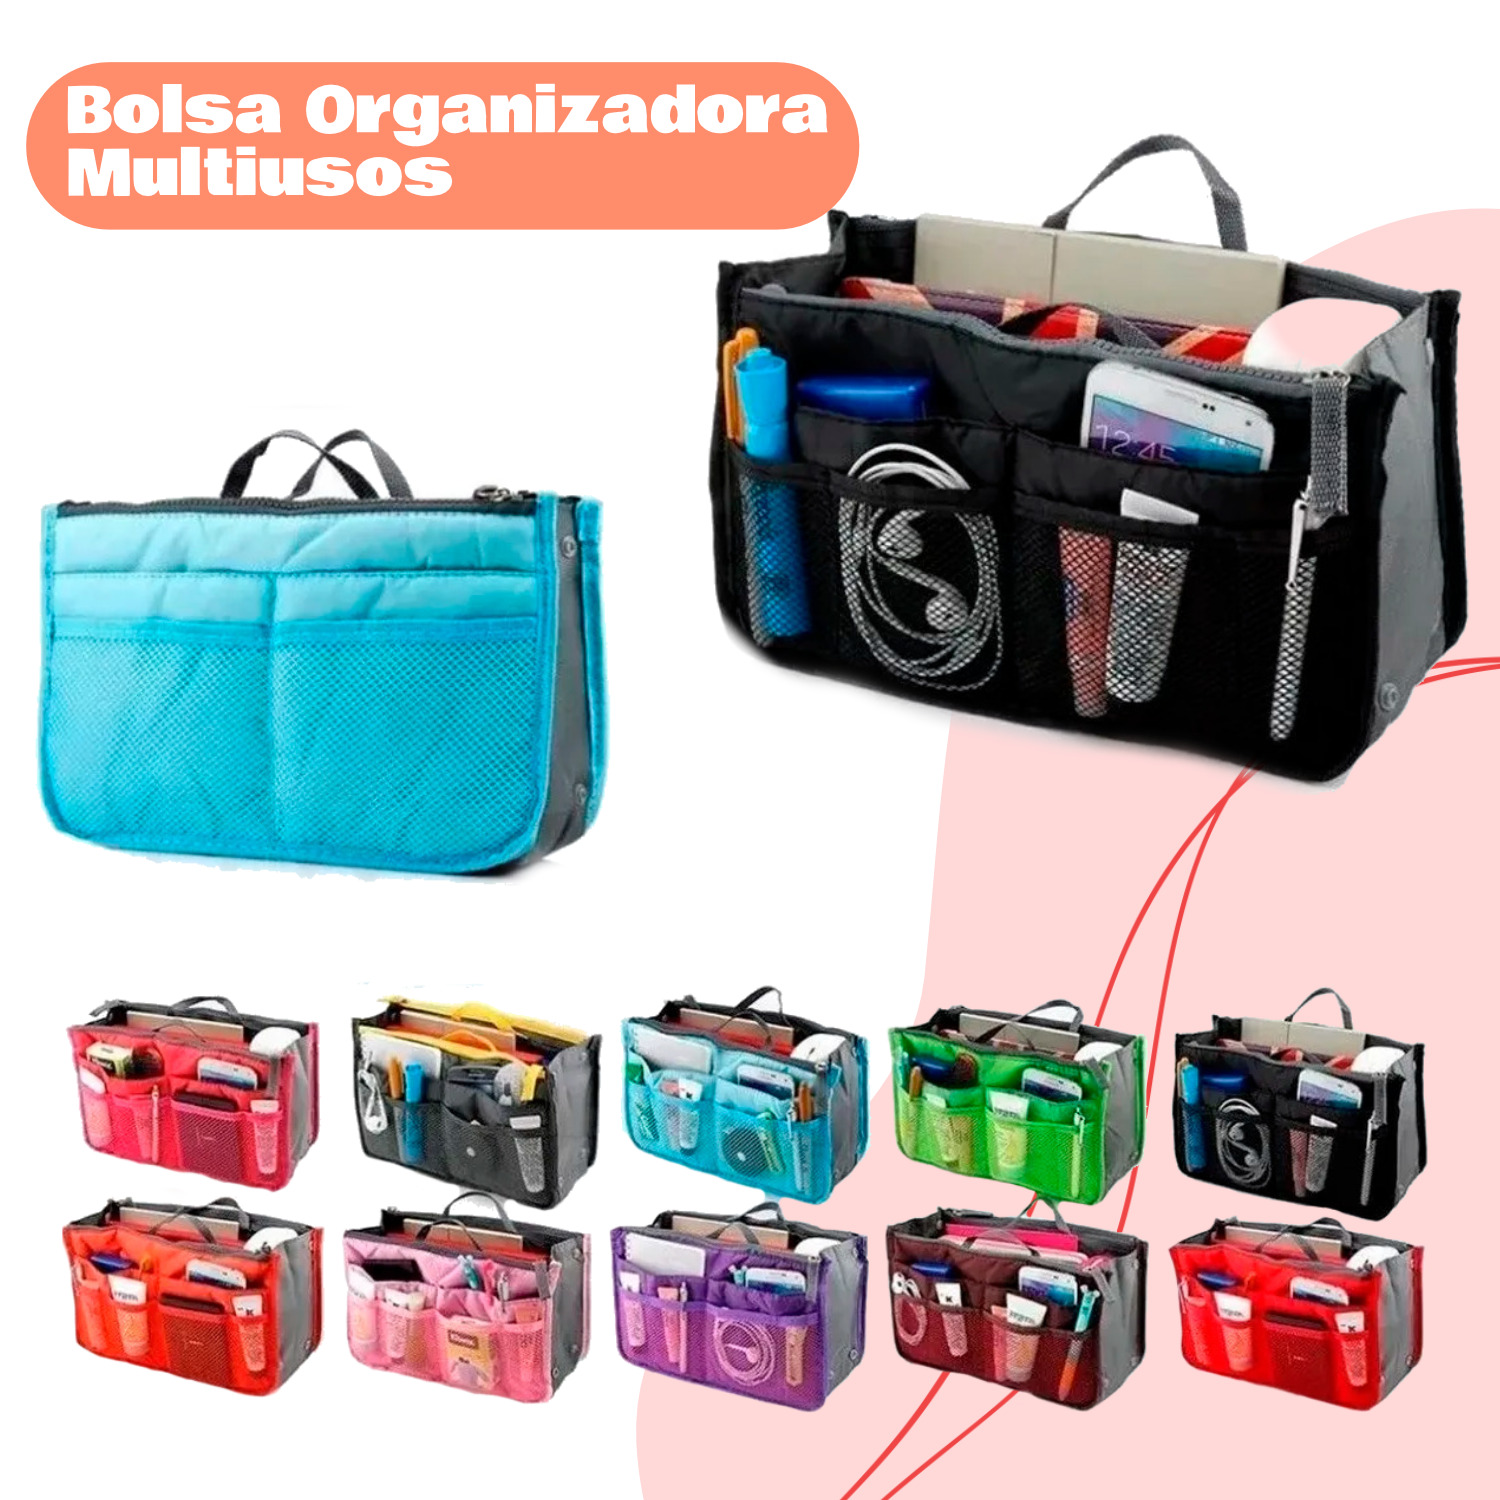 Bolsa Organizadora Multiusos Bolso Mochila, Variedad Colores